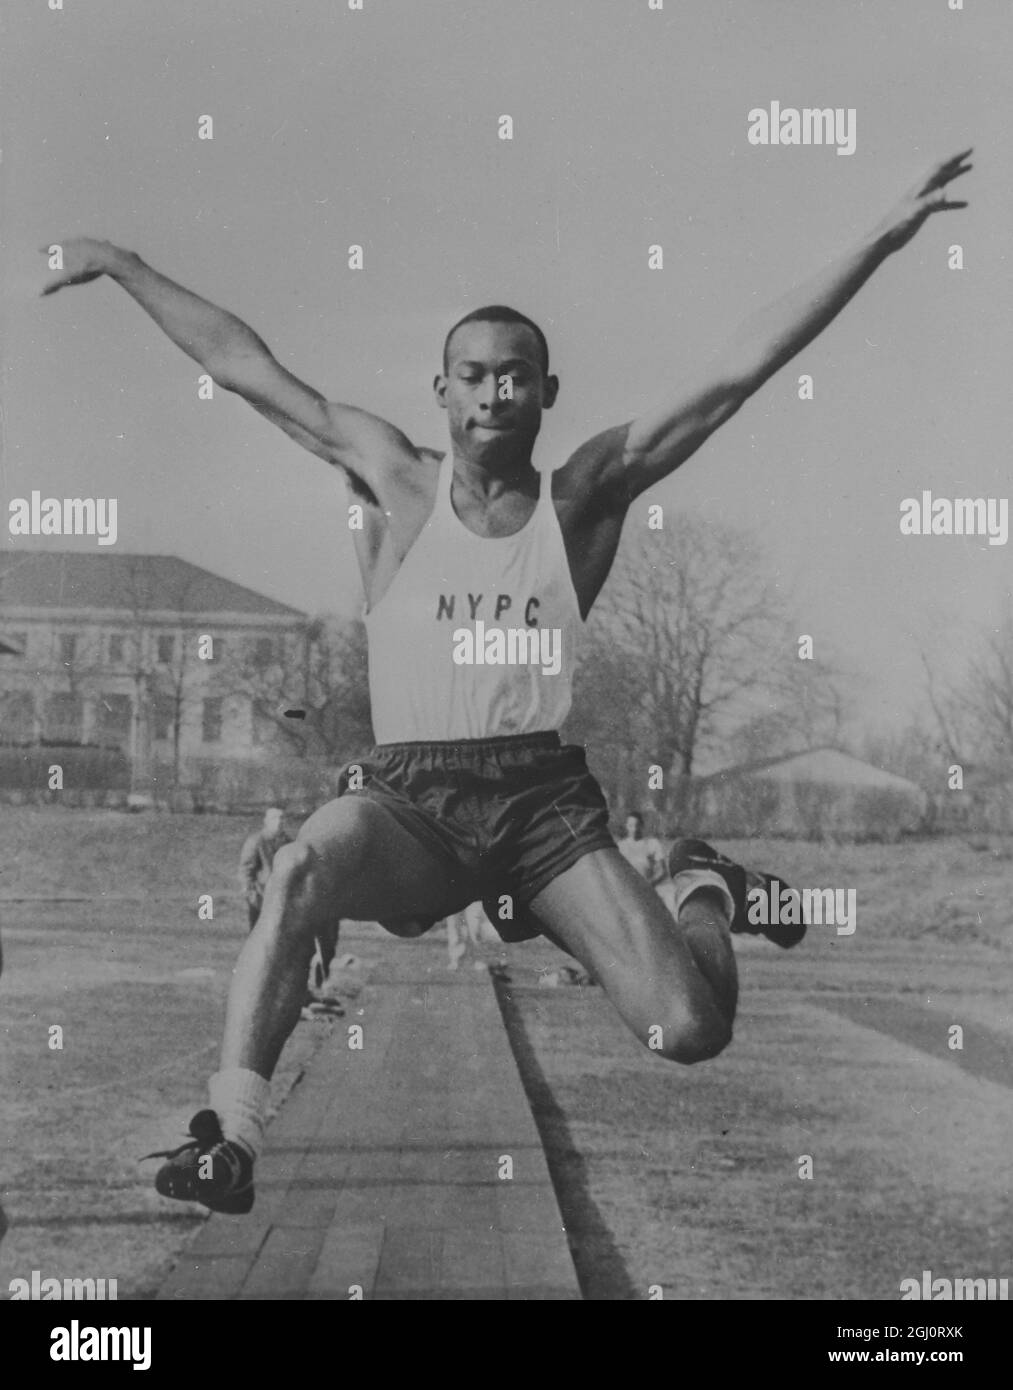 ATHLETE LENNY MOORE MAKES A 24 FEET 1 INCH LONG JUMP 4 JANUARY 1960 Stock Photo